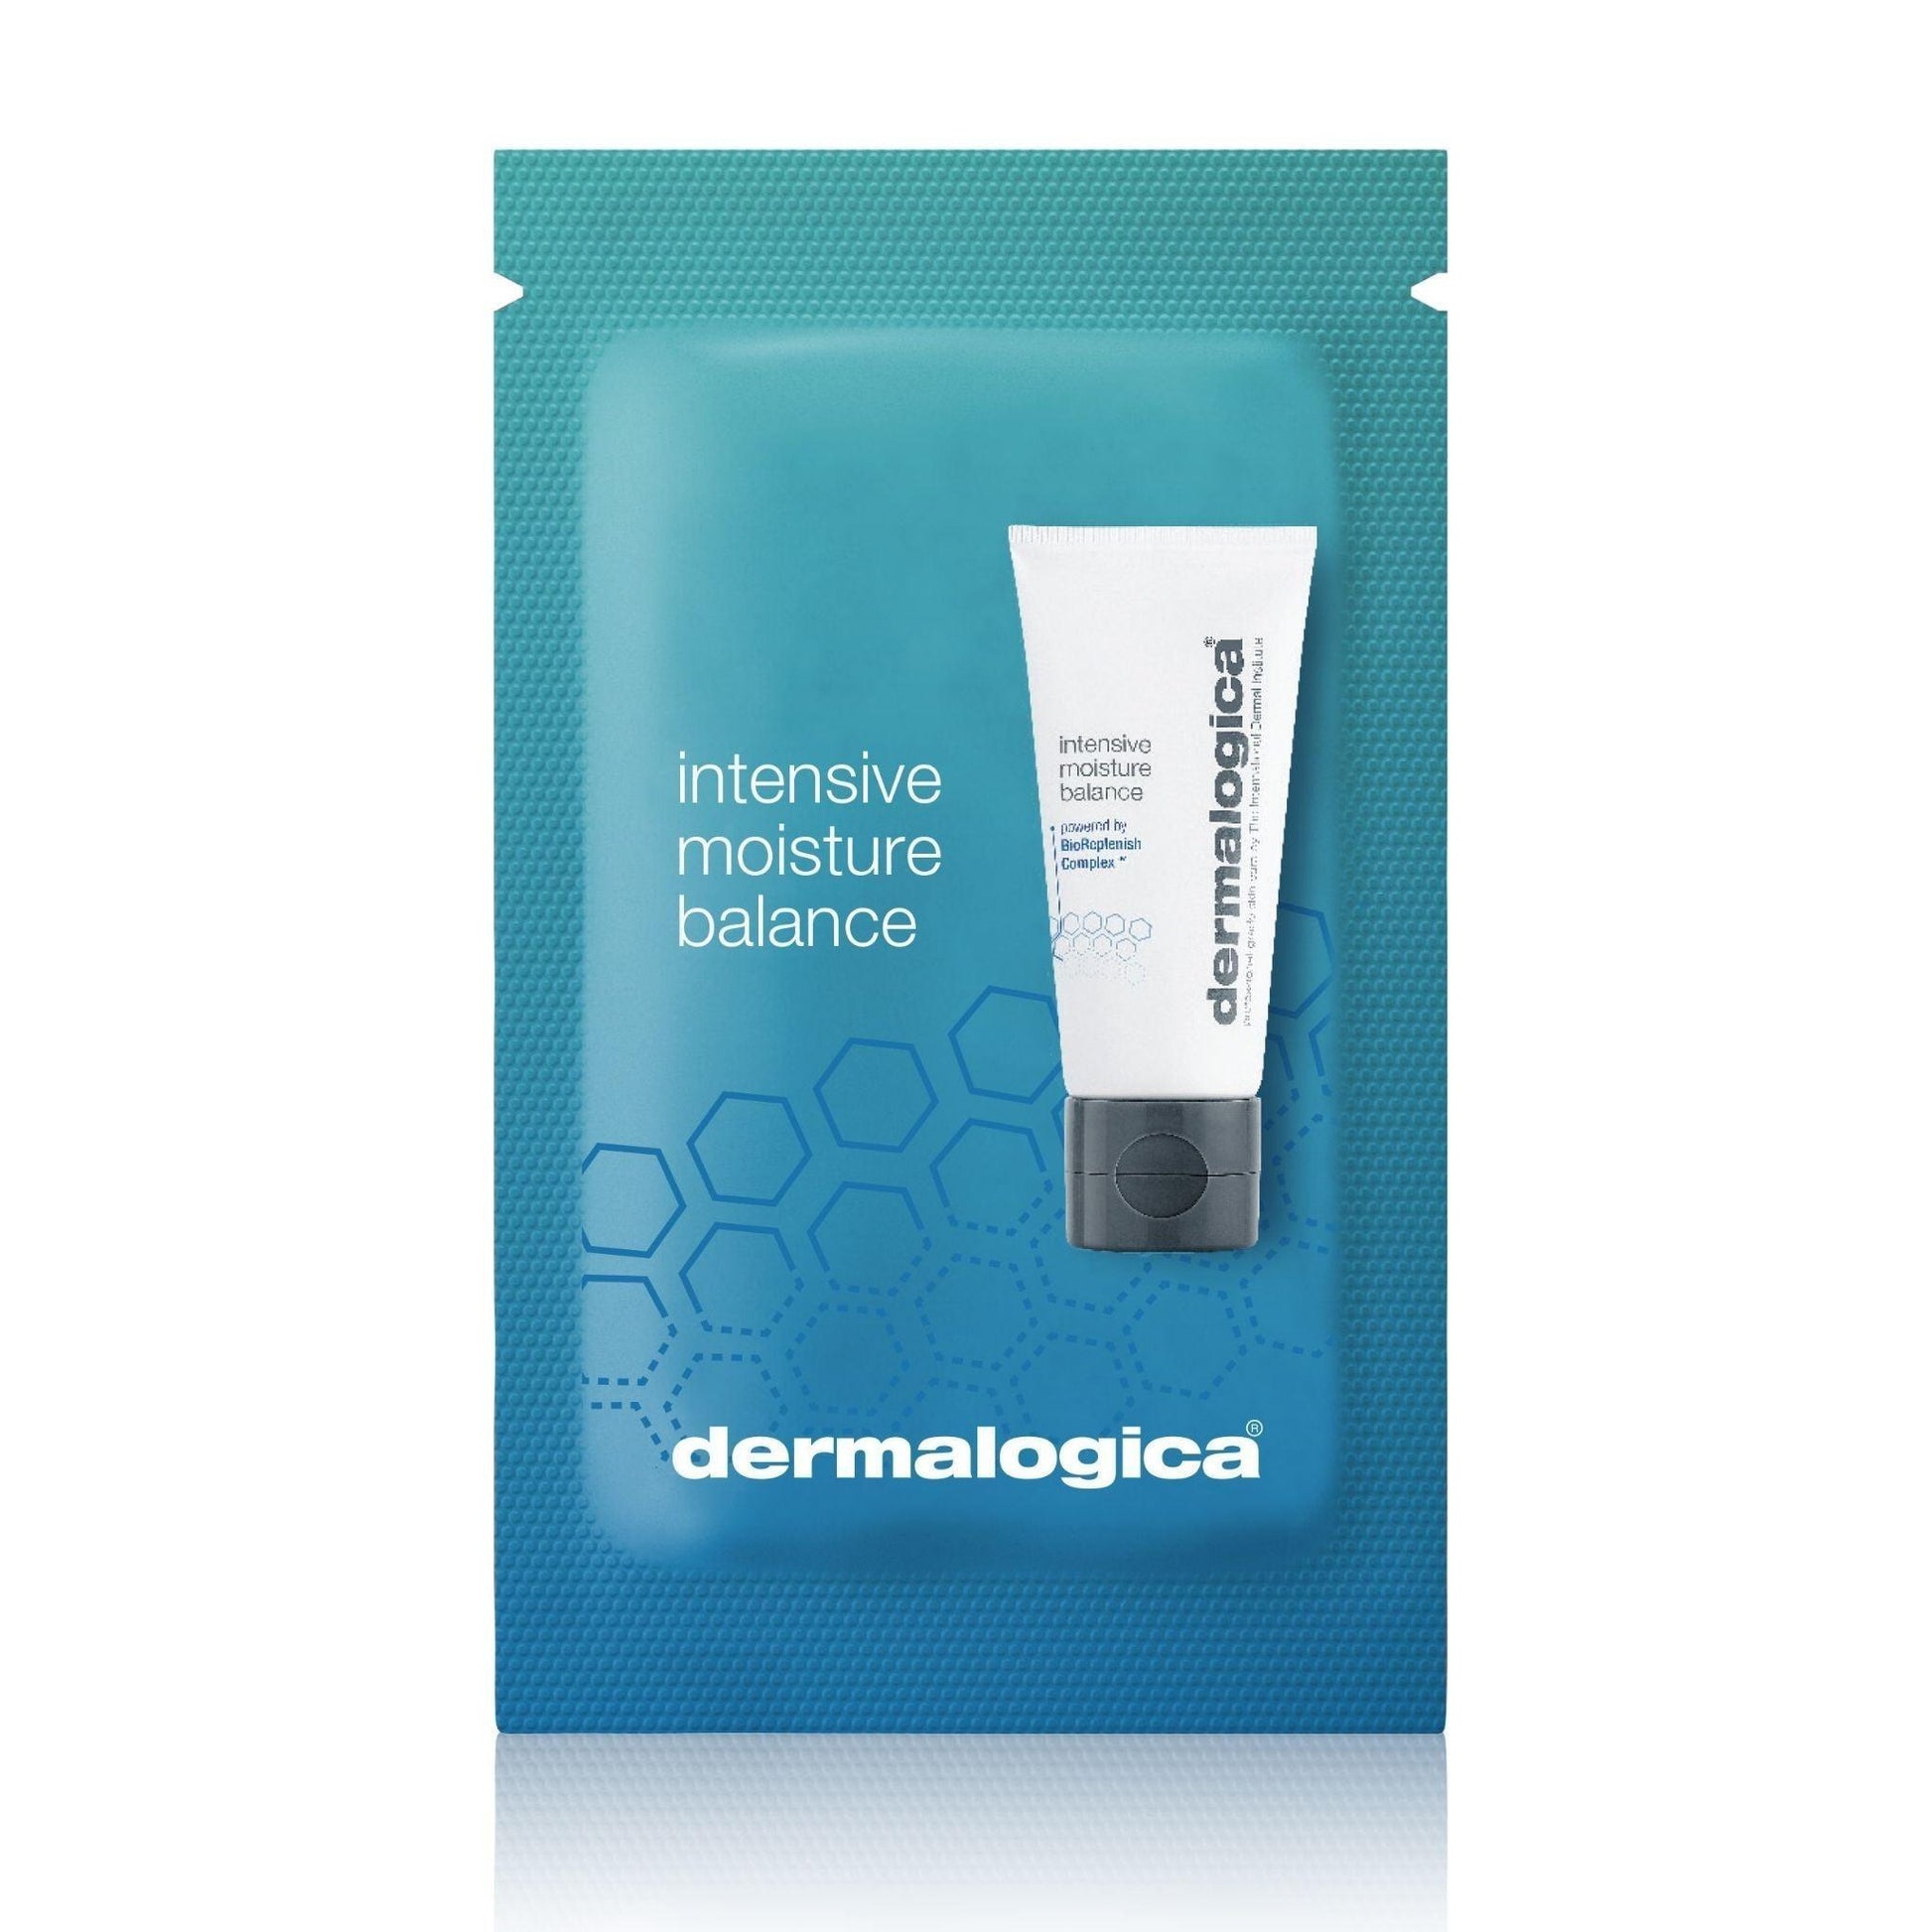 intensive moisture balance moisturizer (sample) - Dermalogica Singapore